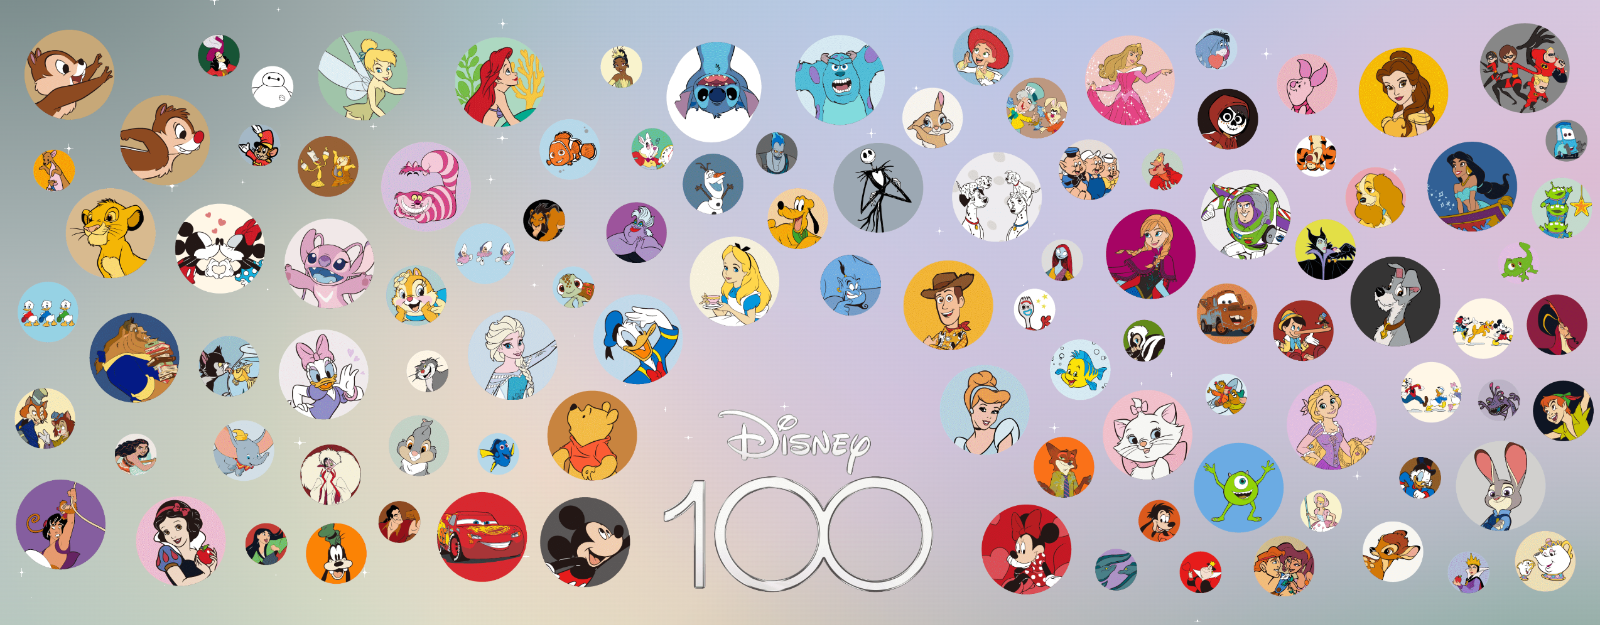 Disney 100 Years of Wonder x Samantha thavasa 100 Kinds Hand Bag Pascal Tangled